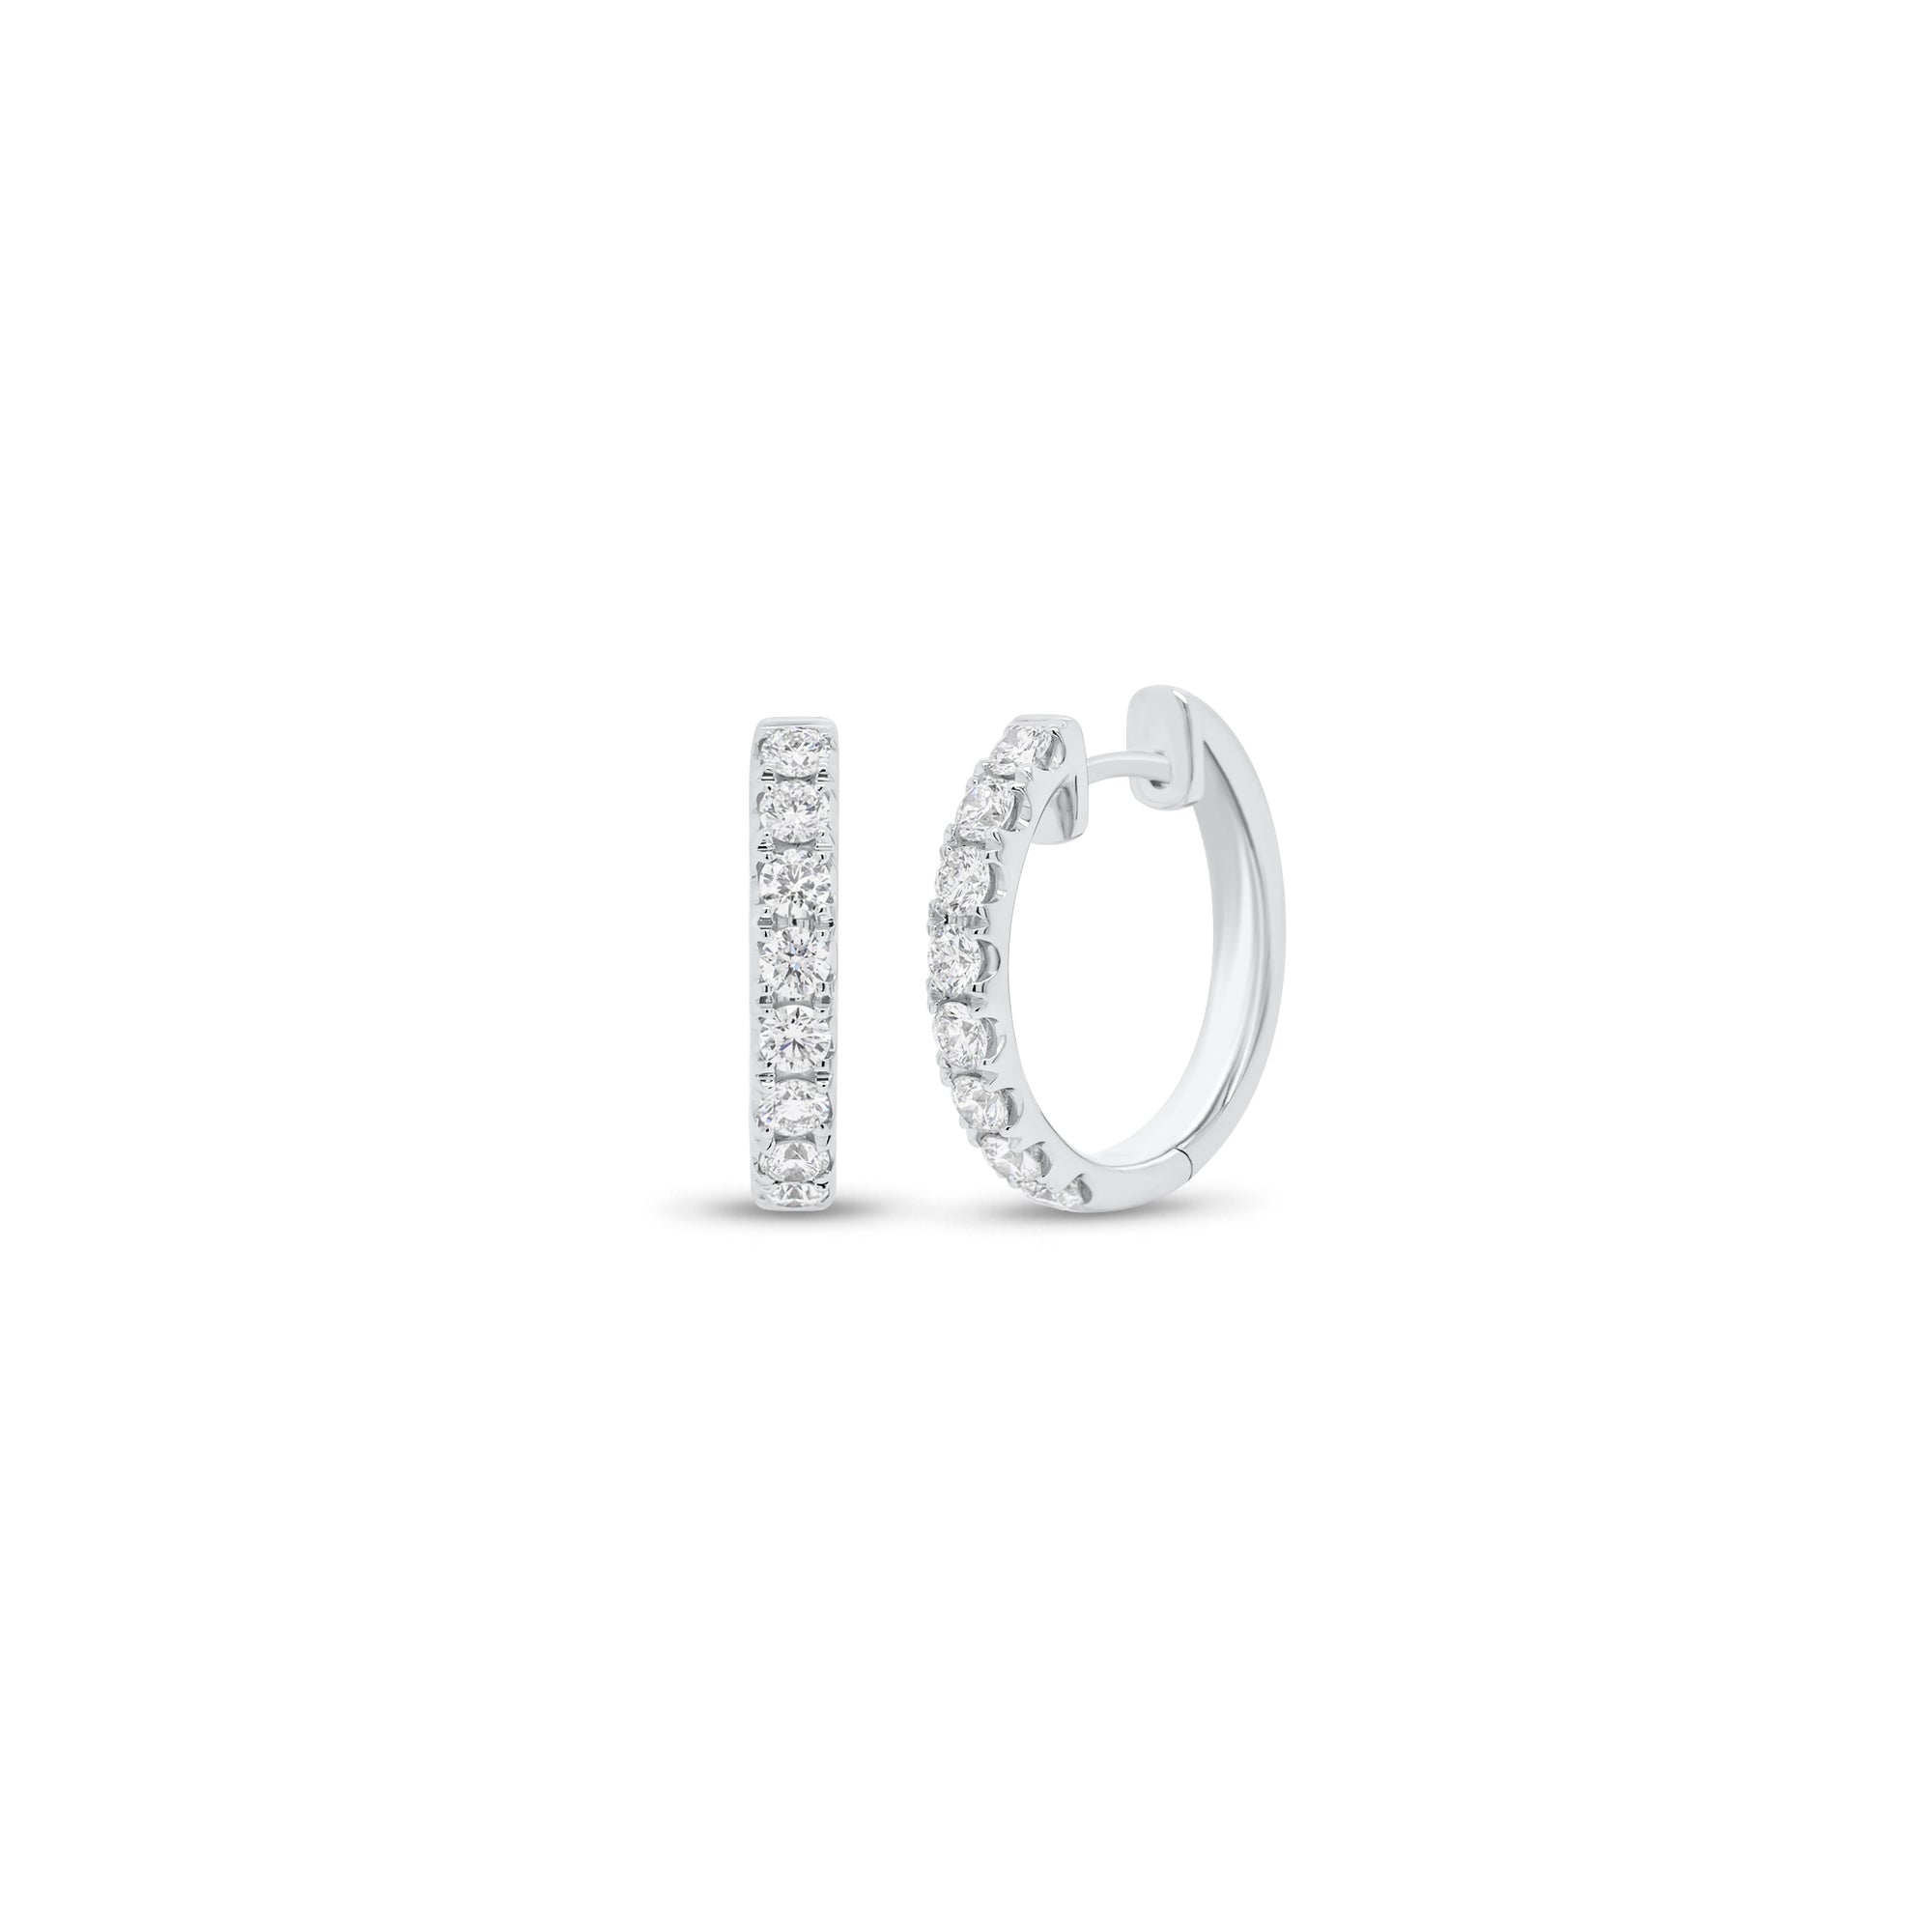 1.12 ct Diamond Huggie Earrings - 18K gold weighing 7.17 grams  - 16 round diamonds weighing 1.12 carats